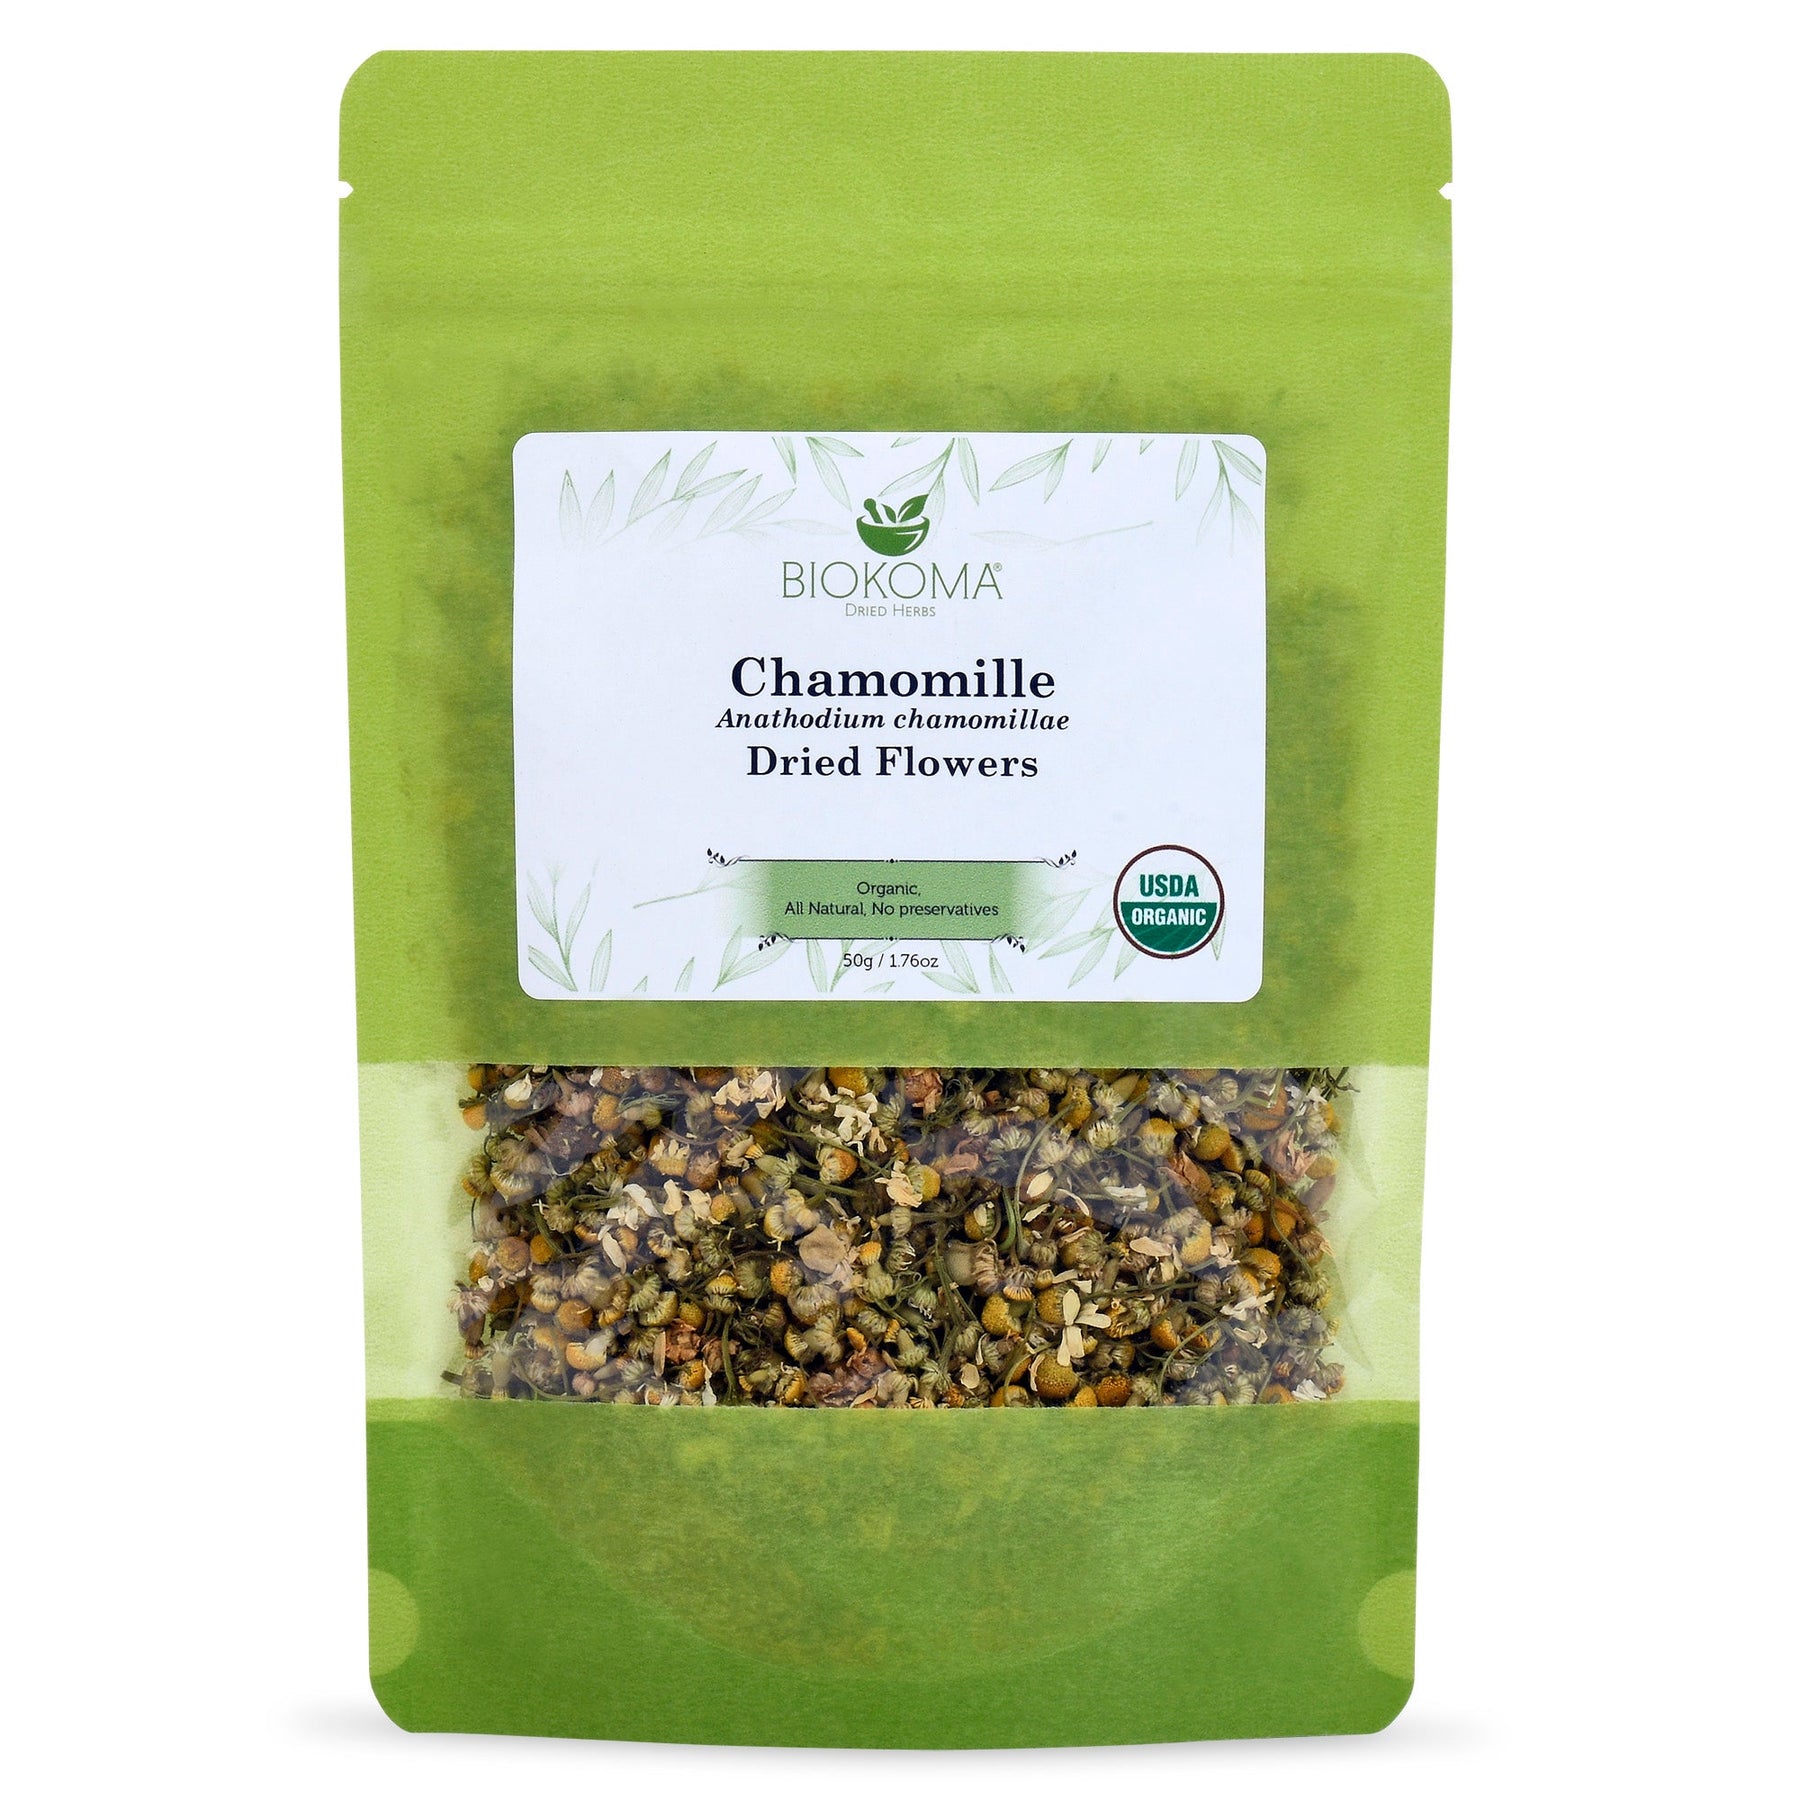 Biokoma Chamomile (Anthodium chamomillae) Organic Dried Flowers 50g 1.76oz